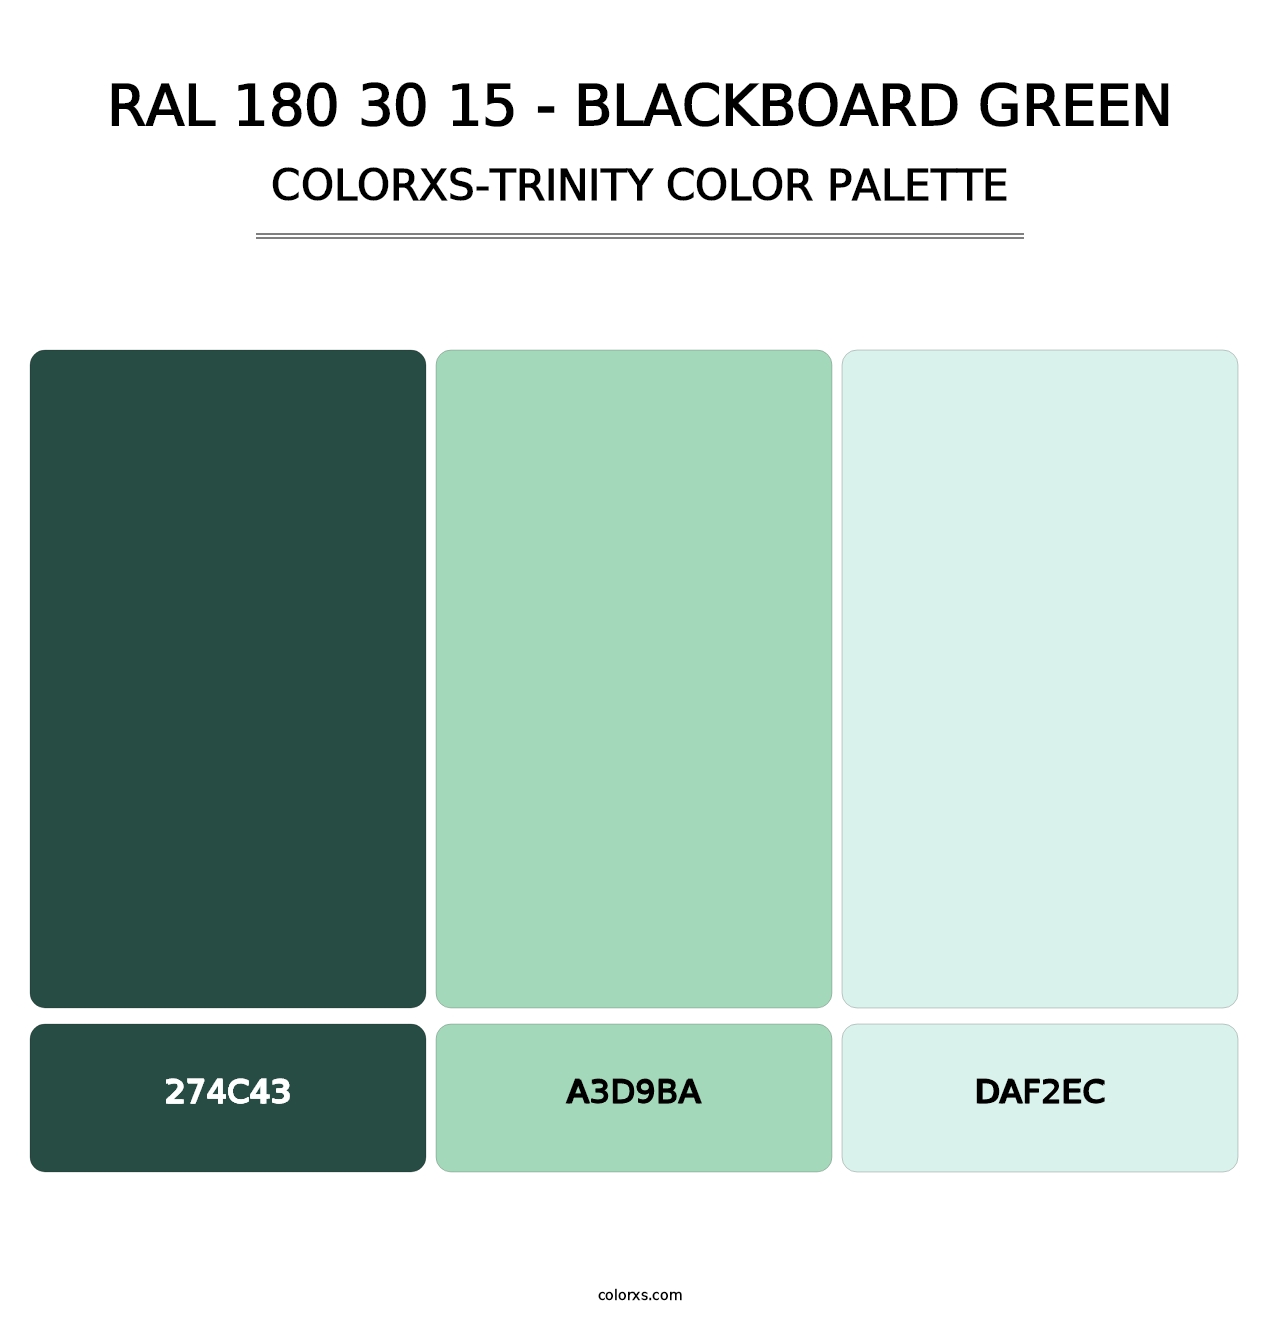 RAL 180 30 15 - Blackboard Green - Colorxs Trinity Palette